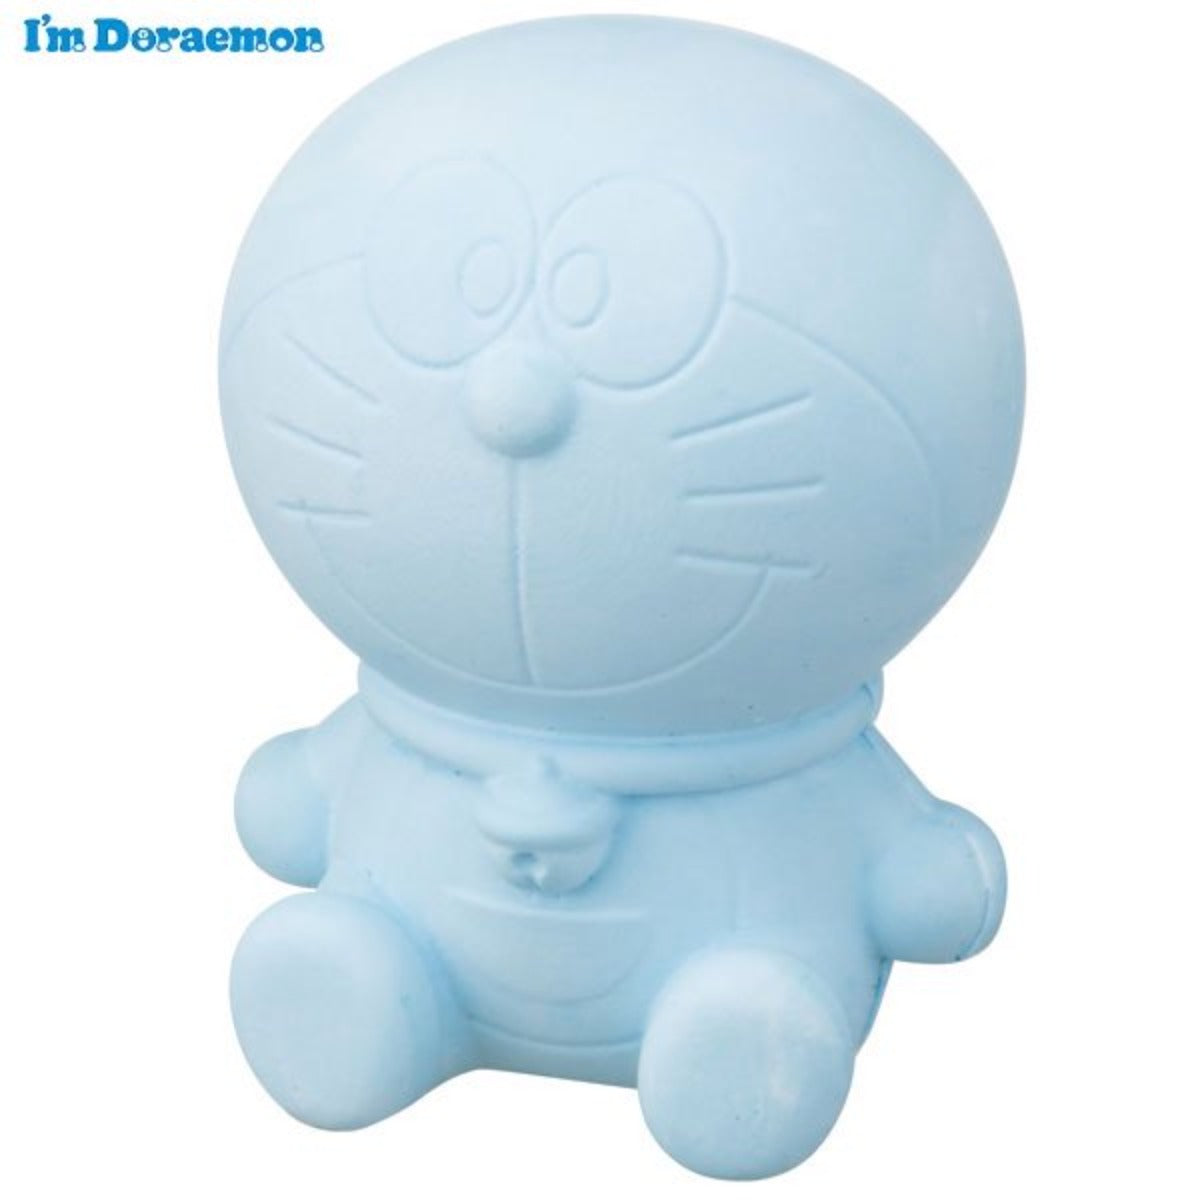 Doraemon Diatomaceous Earth Deodorant (Japan Edition)